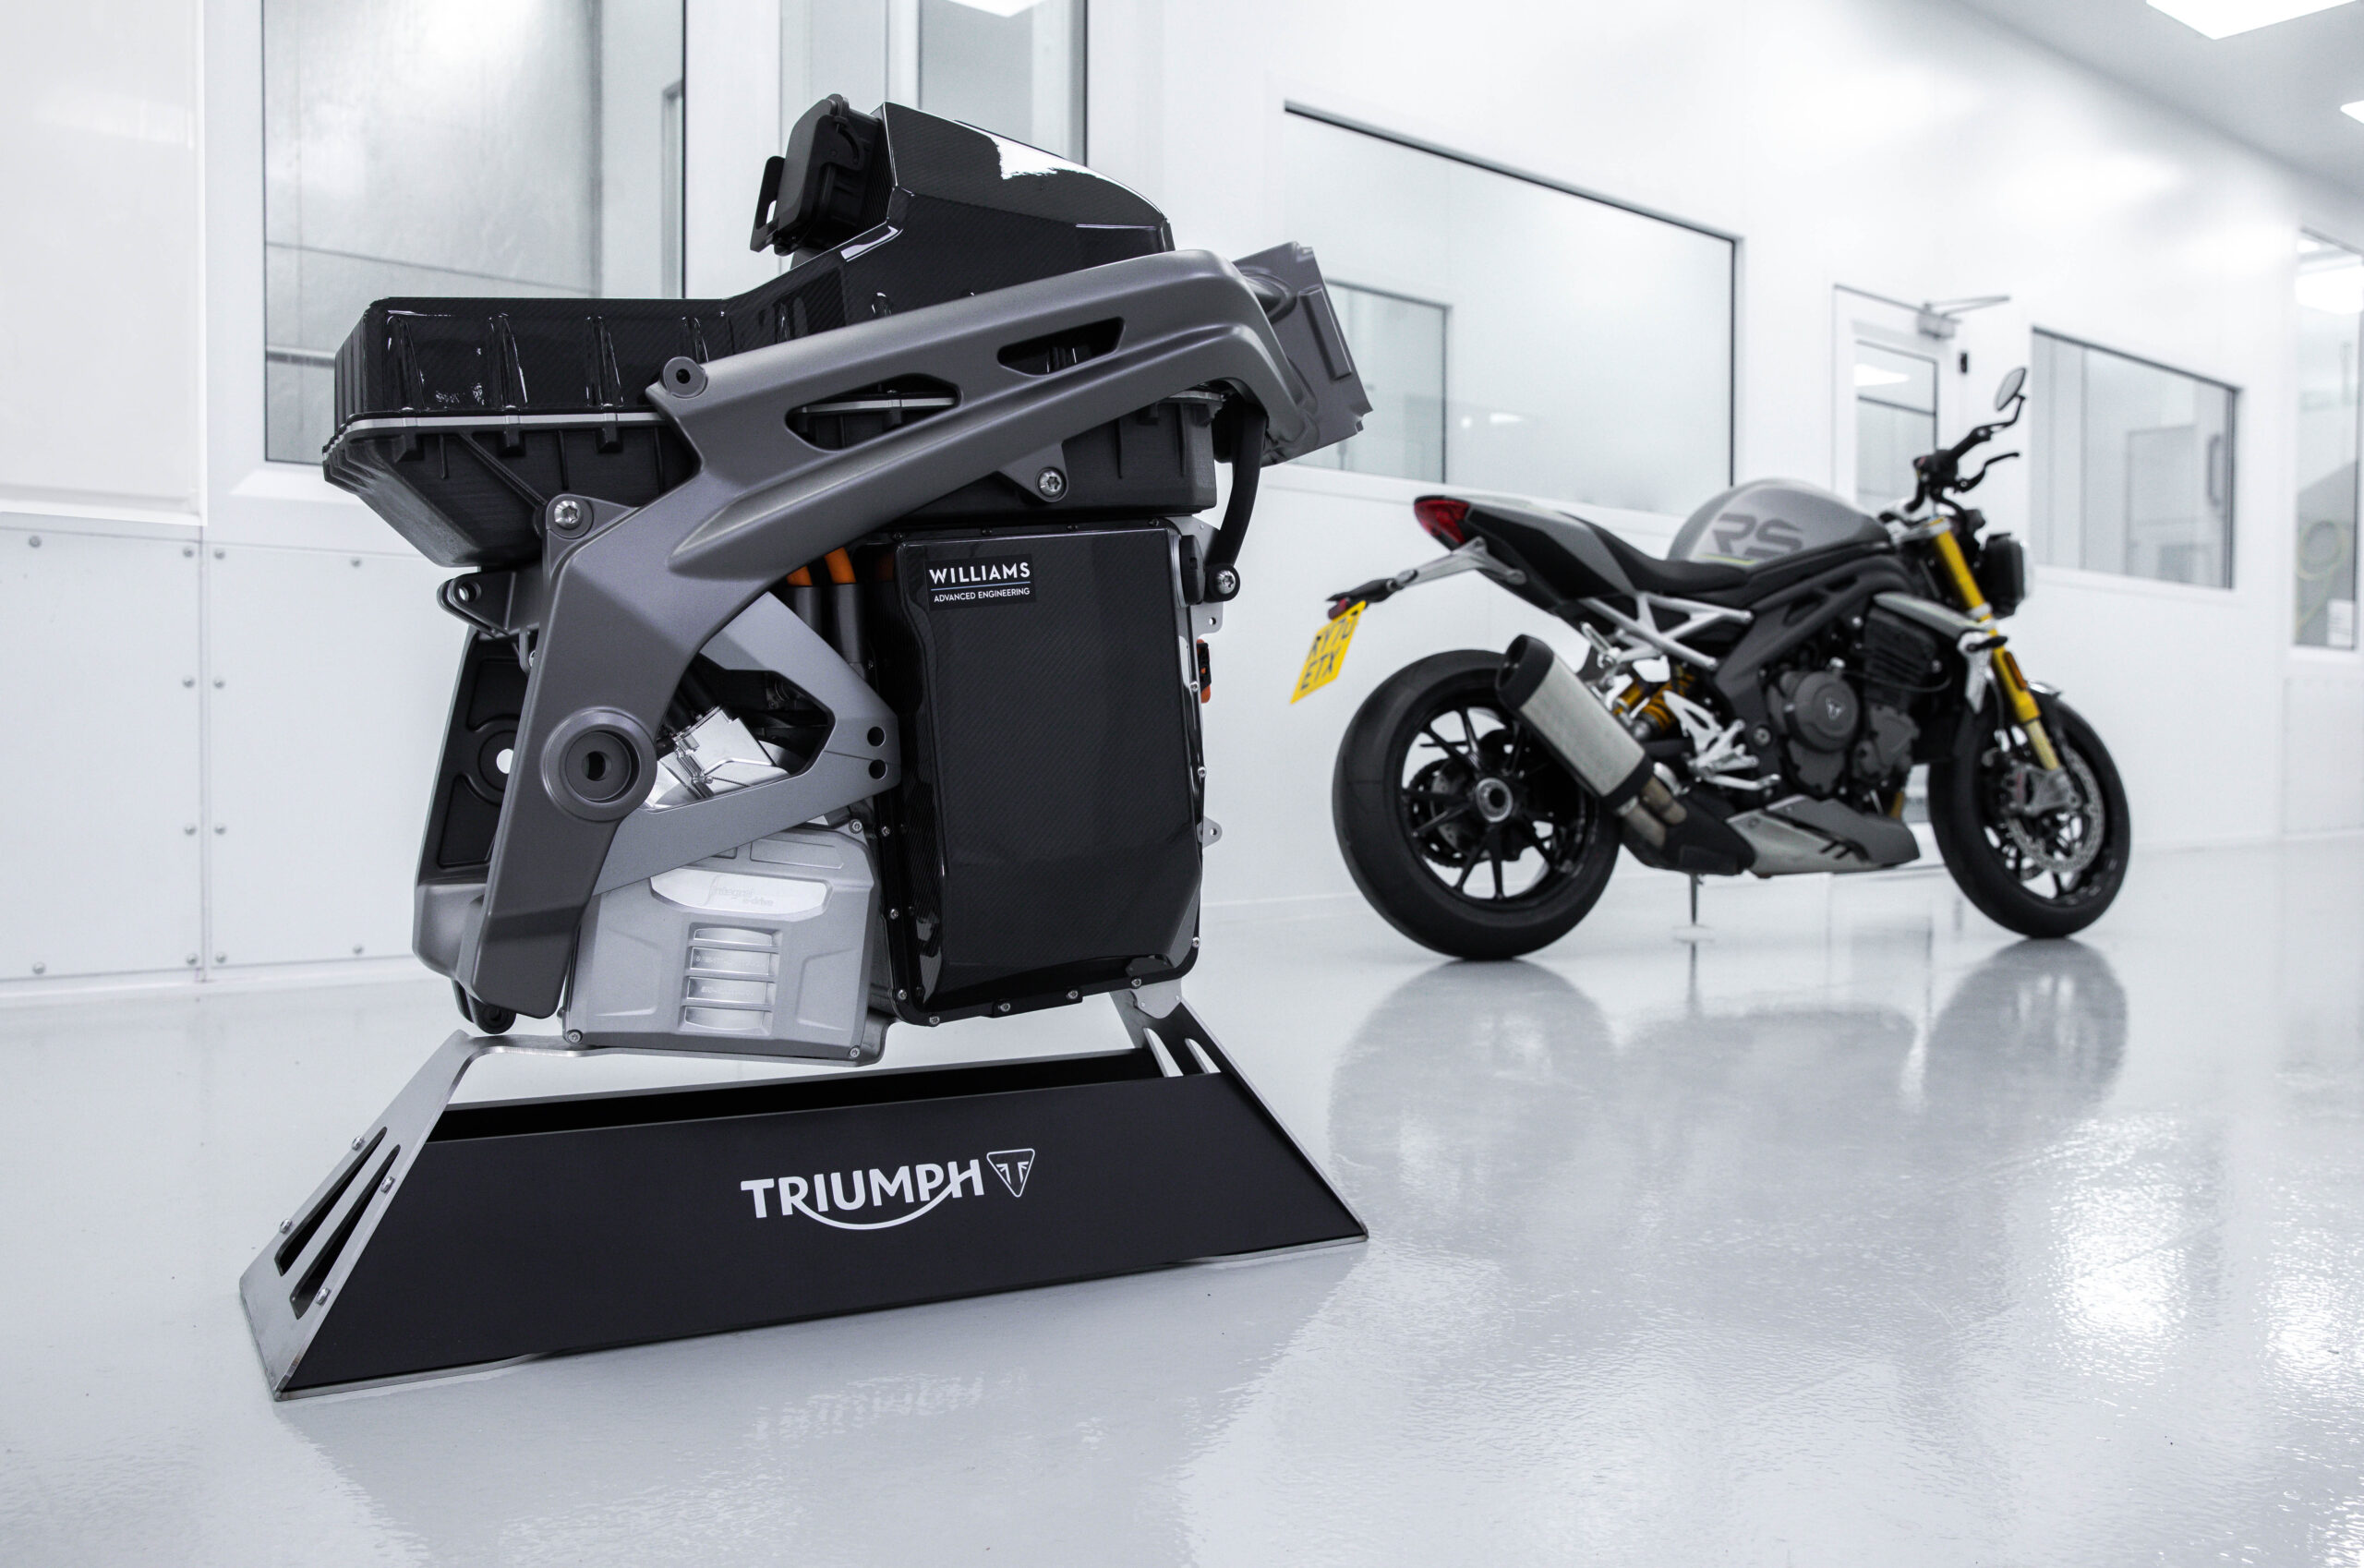 Triumph TE-1 Elektrikli Son Hali Şekilleniyor